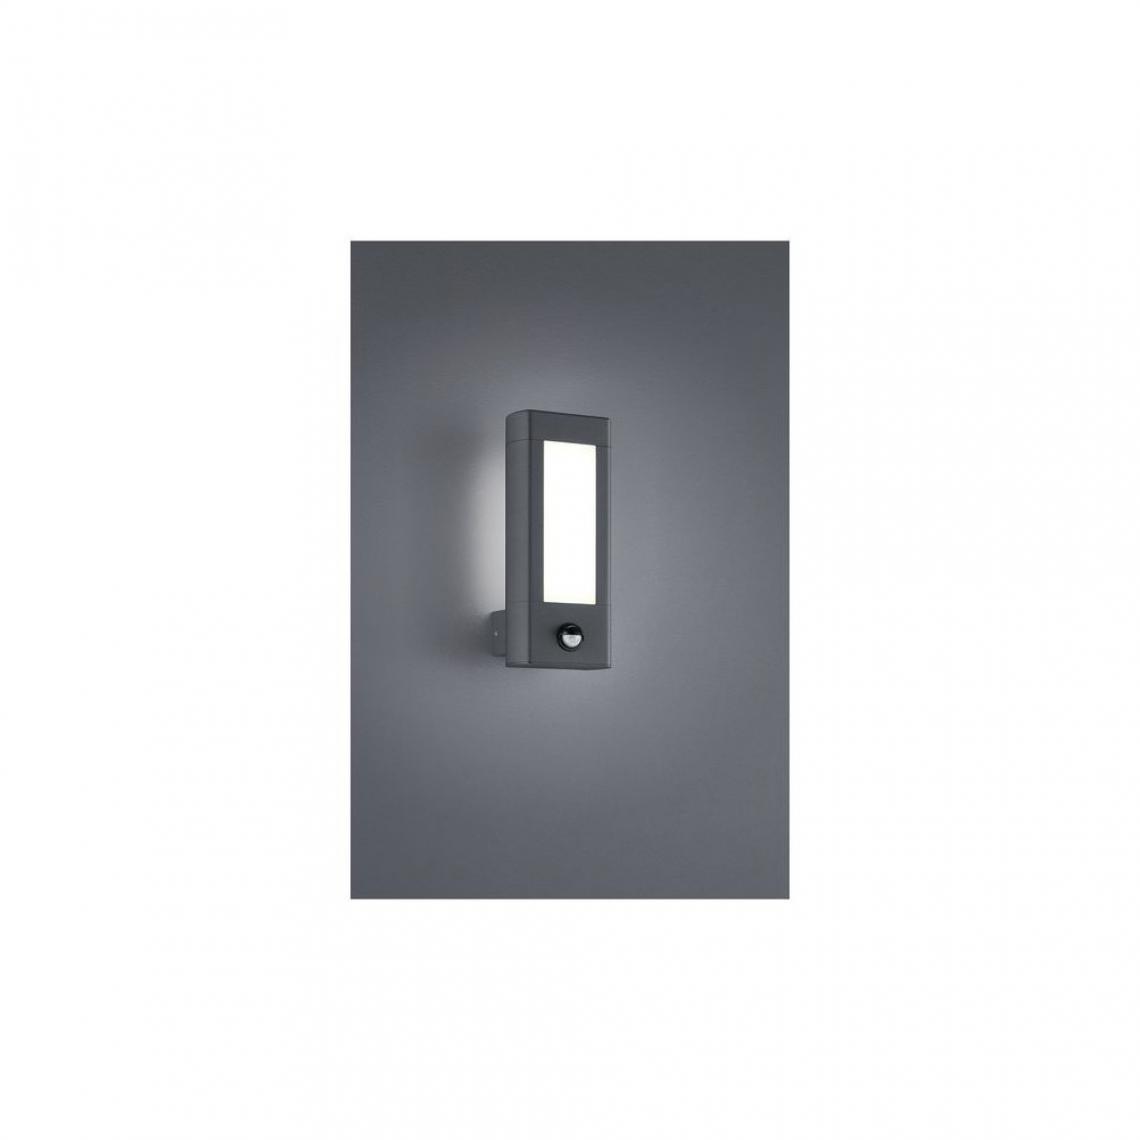 Boutica-Design - Applique Rhine Anthracite 2x4W SMD LED H28 - Applique, hublot